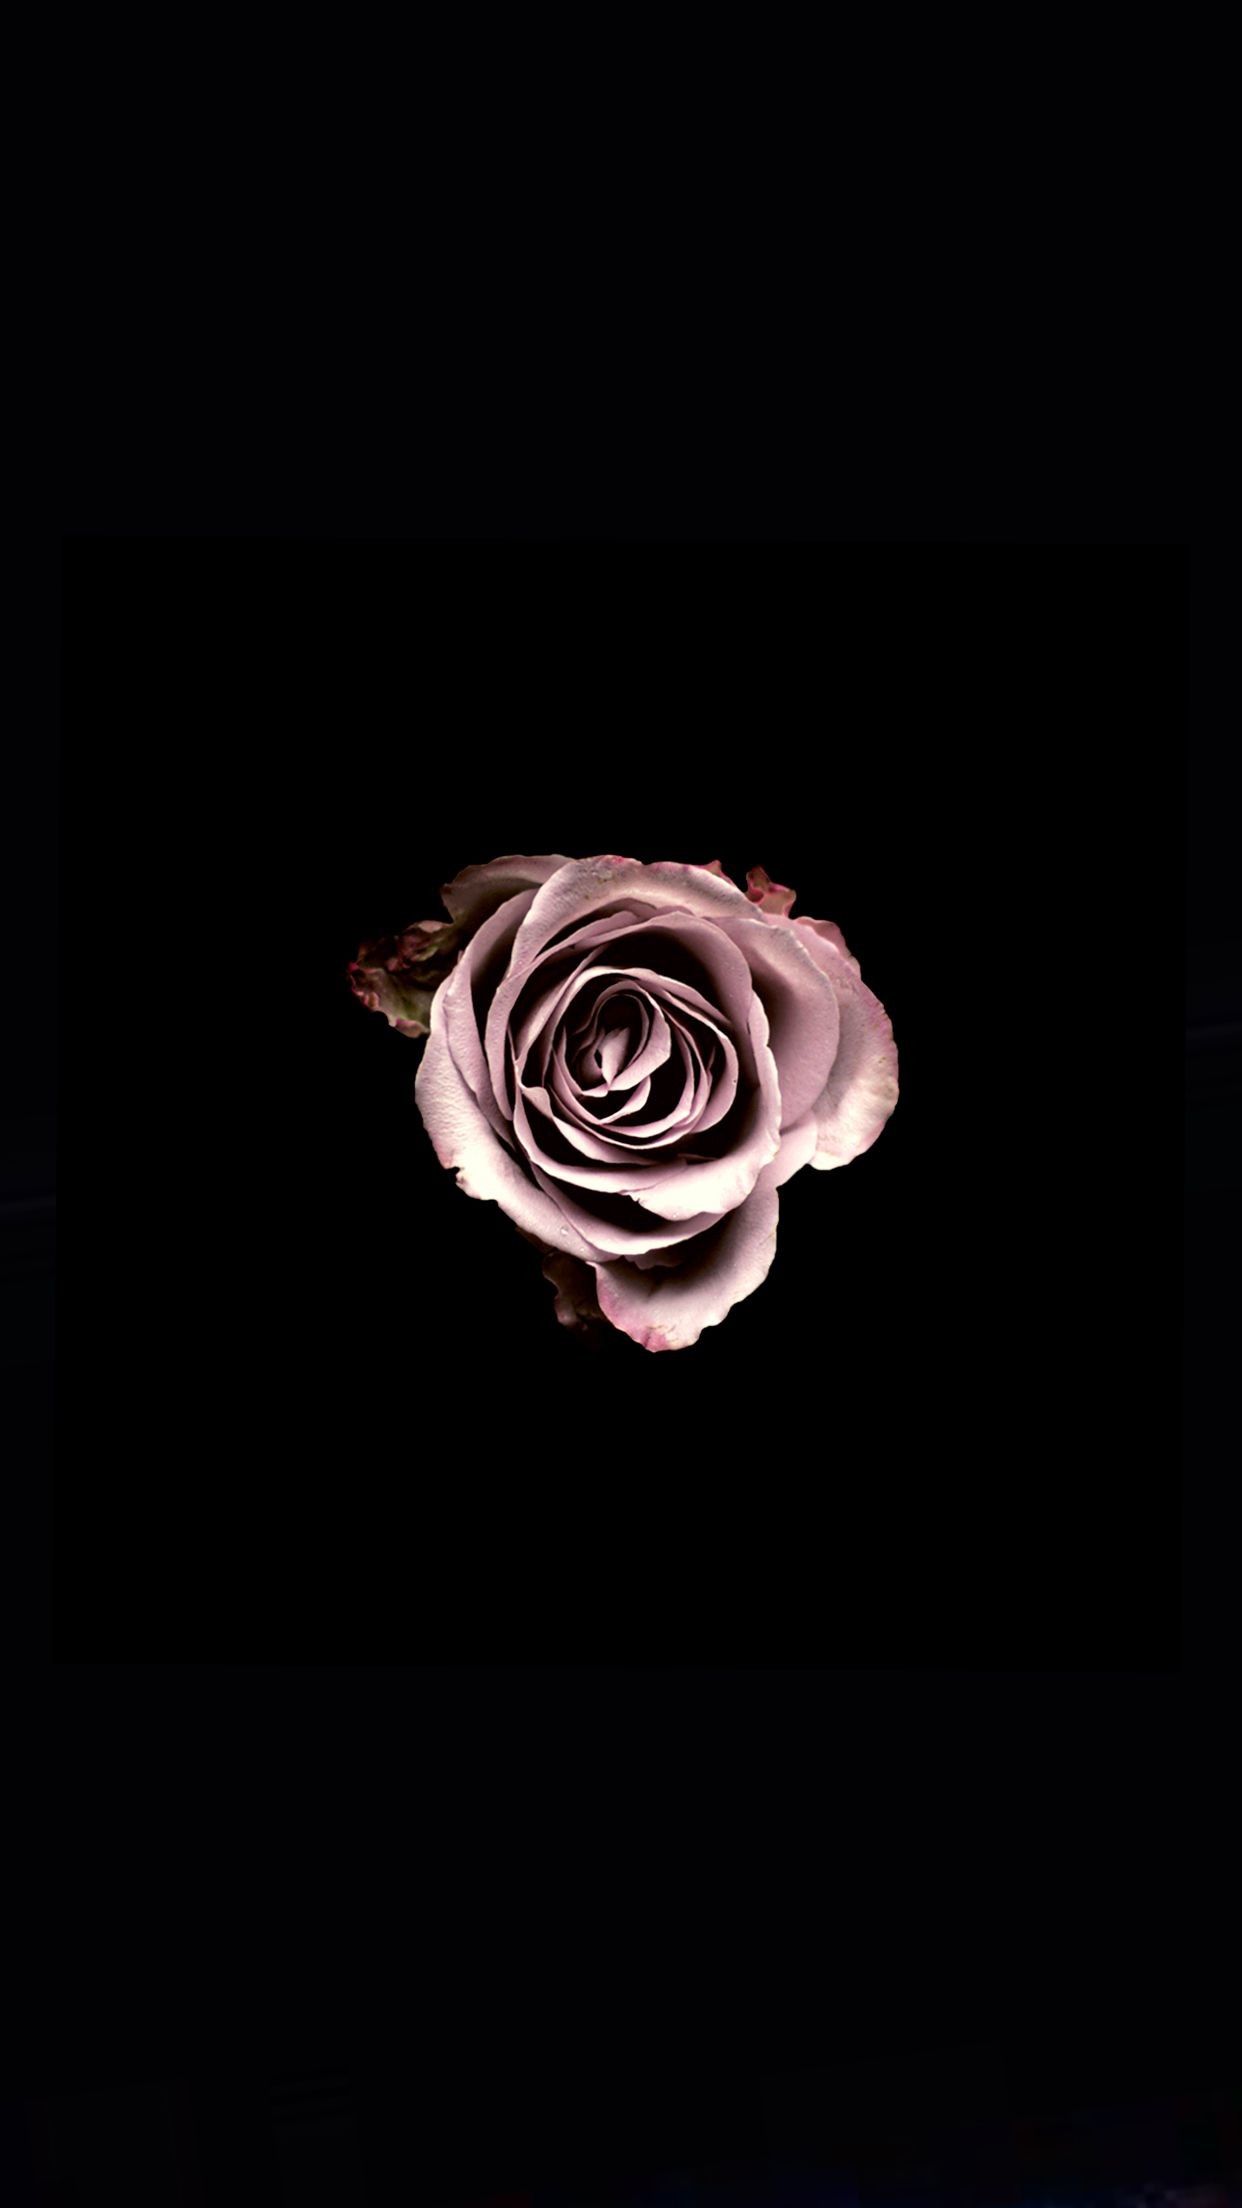 Rose Black Wallpaper  Free photo on Pixabay  Pixabay